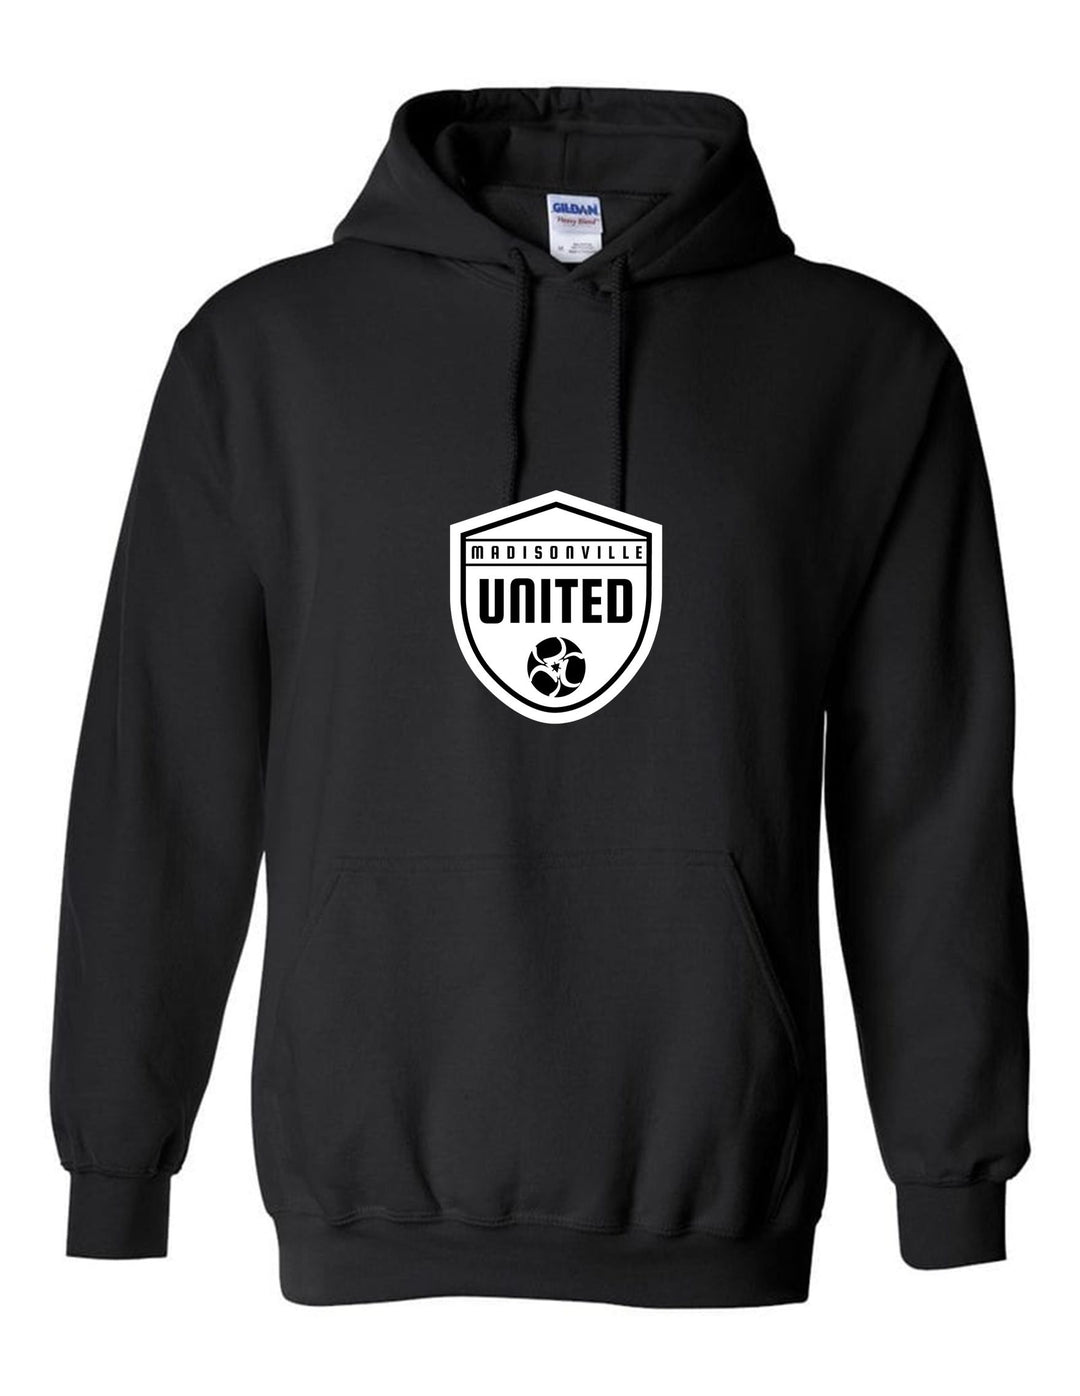 Madidsonville United Hoody - Black, Grey, Navy or White Madisonville United Spiritwear MENS LARGE BLACK - Third Coast Soccer